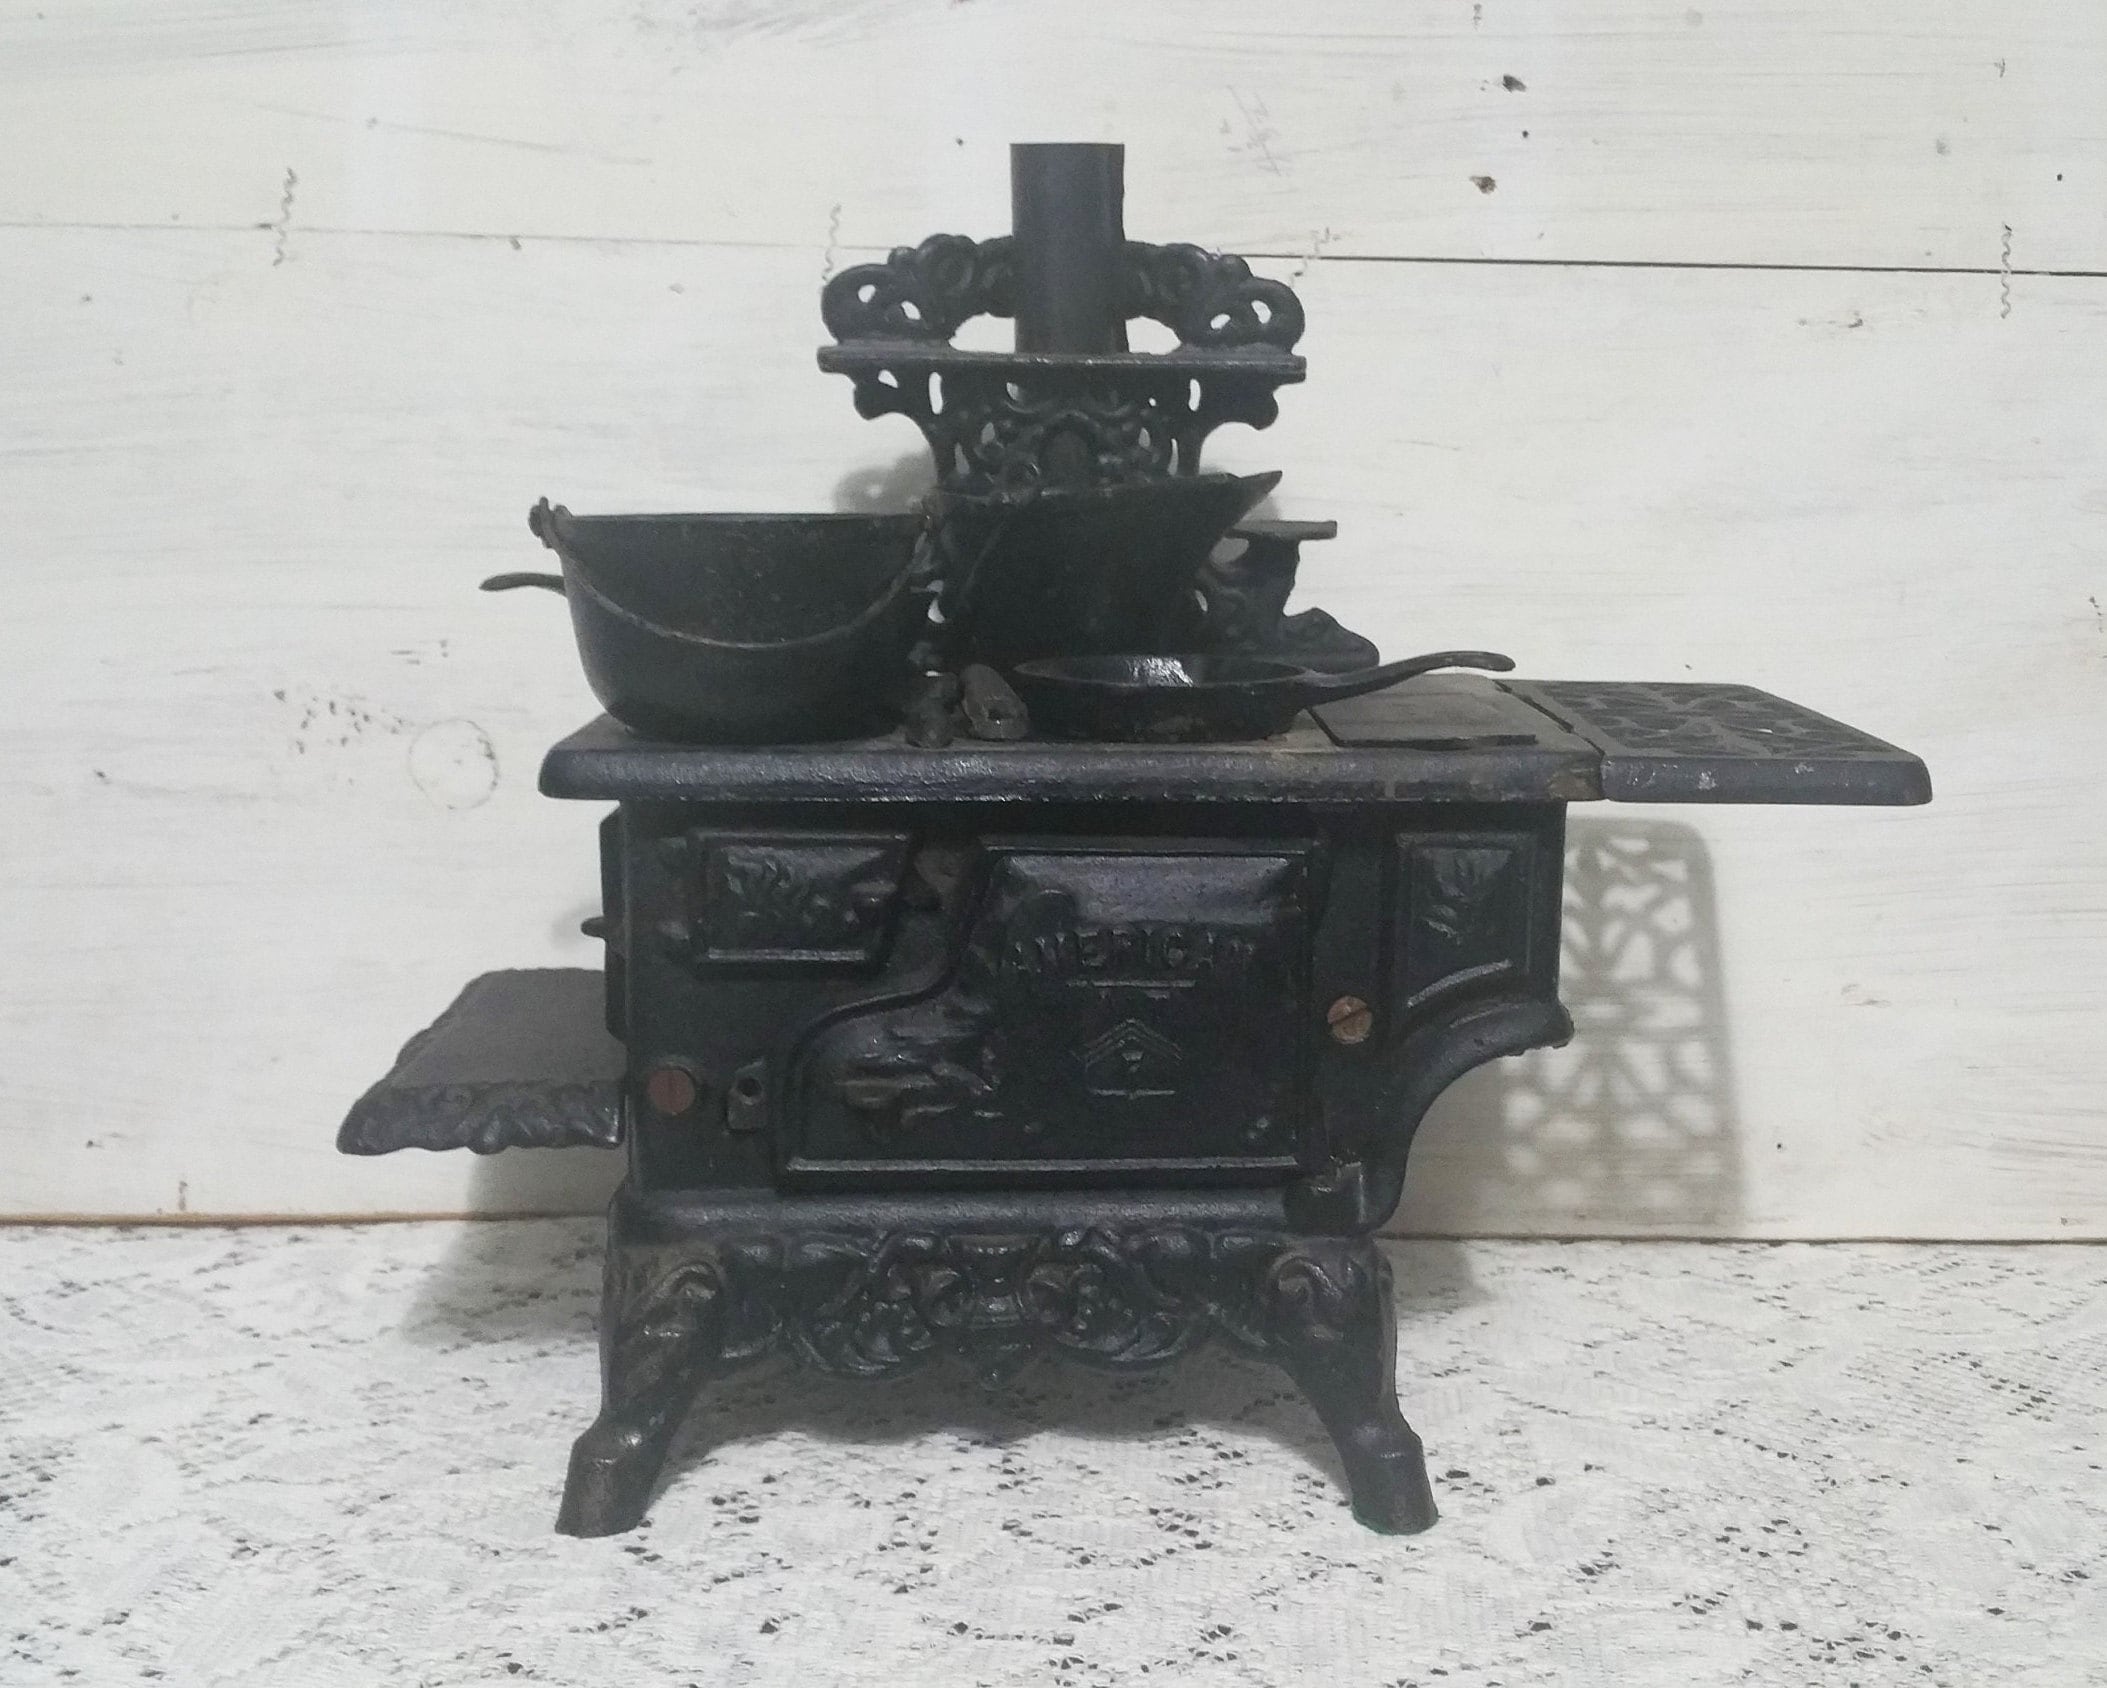 Black Cast Iron Enamel Cookware Set - Salamander Stoves